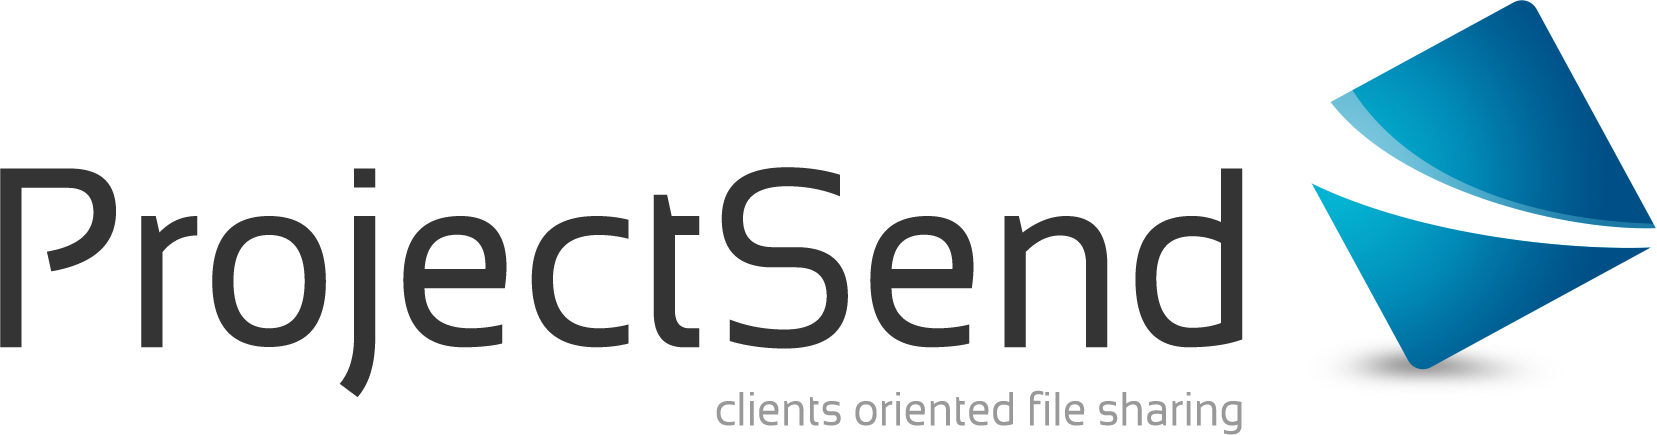 ProjectSend logo